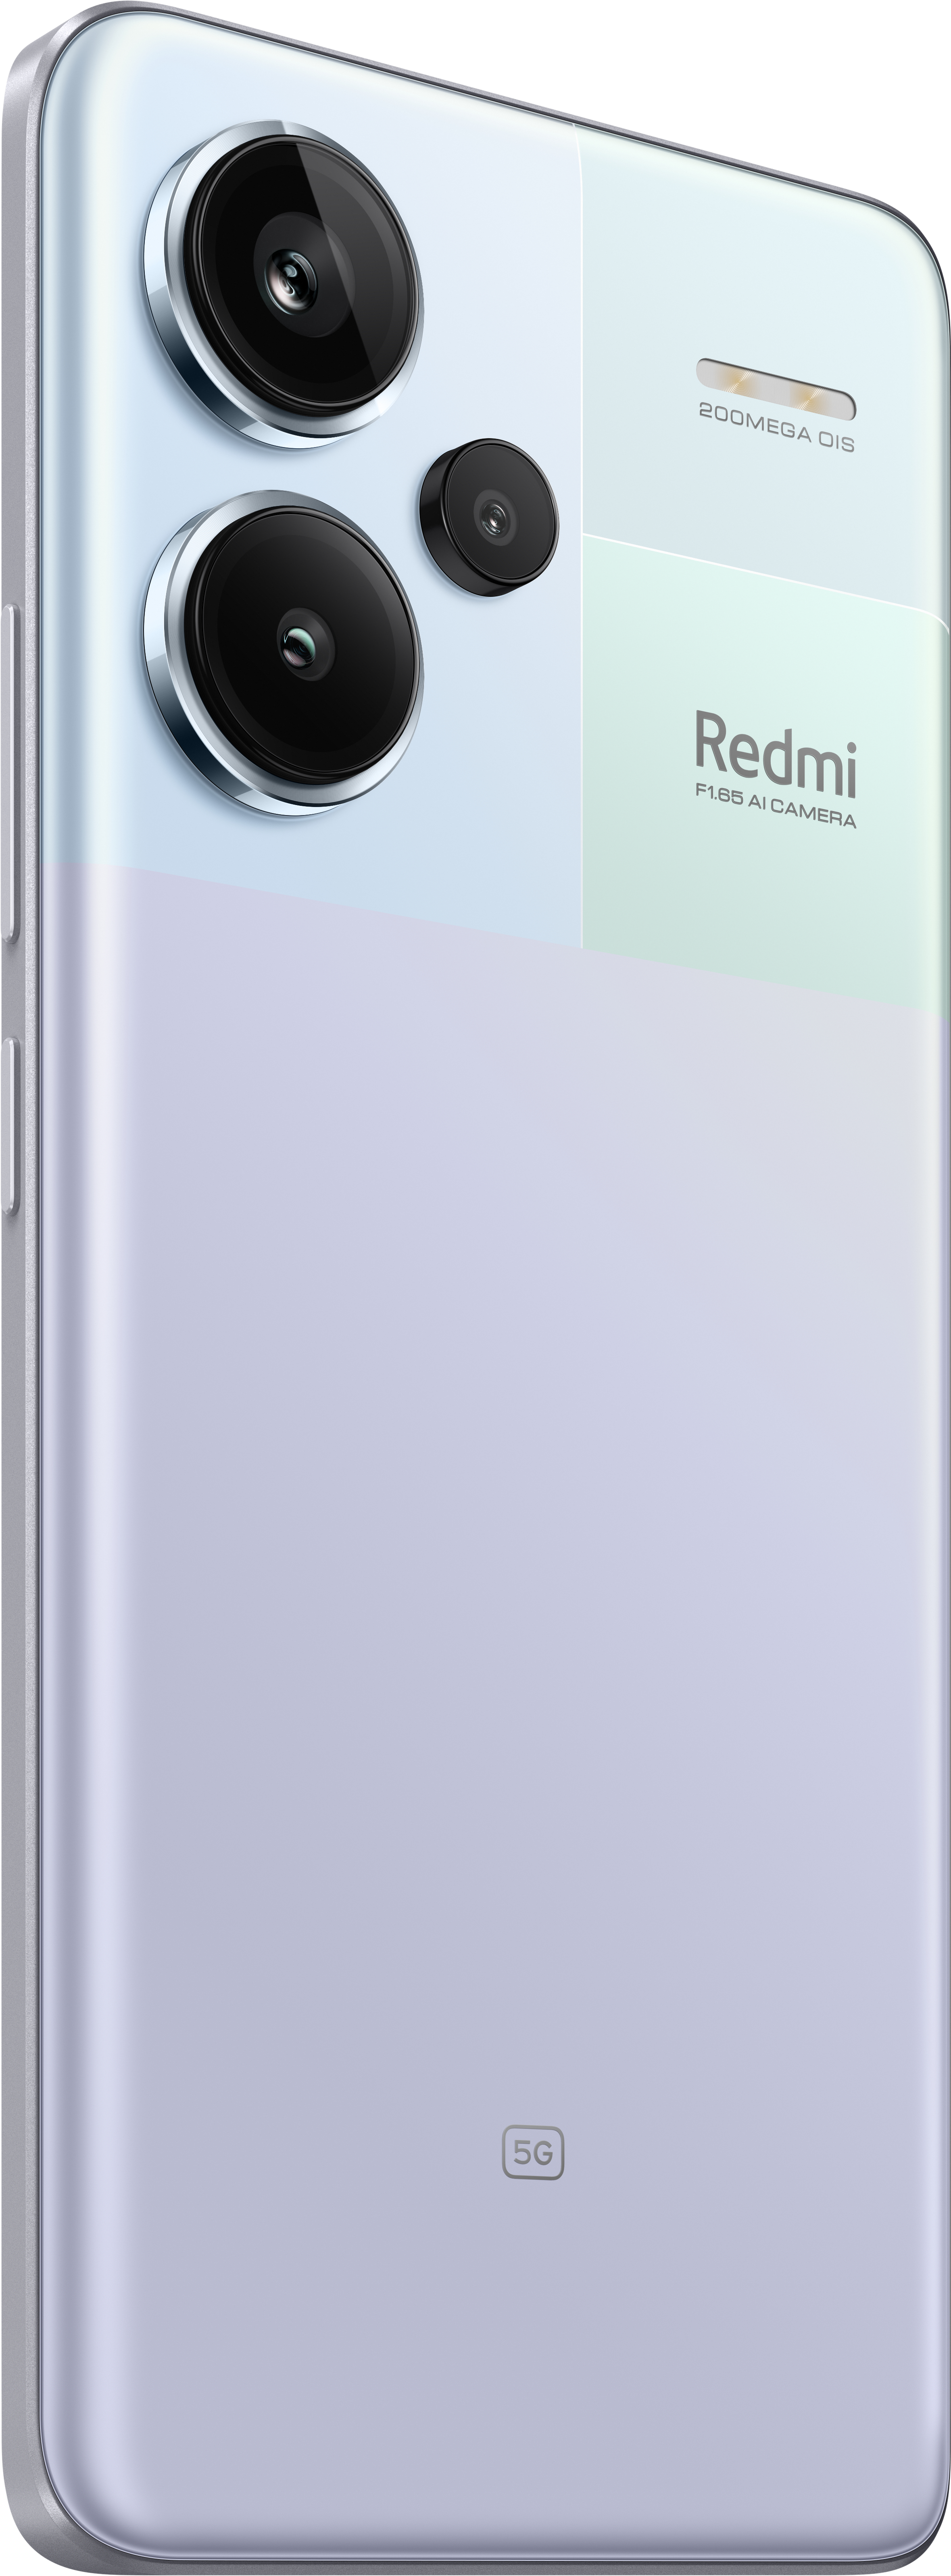 Dual 13 XIAOMI Redmi SIM 512 Note Pro+ Aurora Purple 5G GB